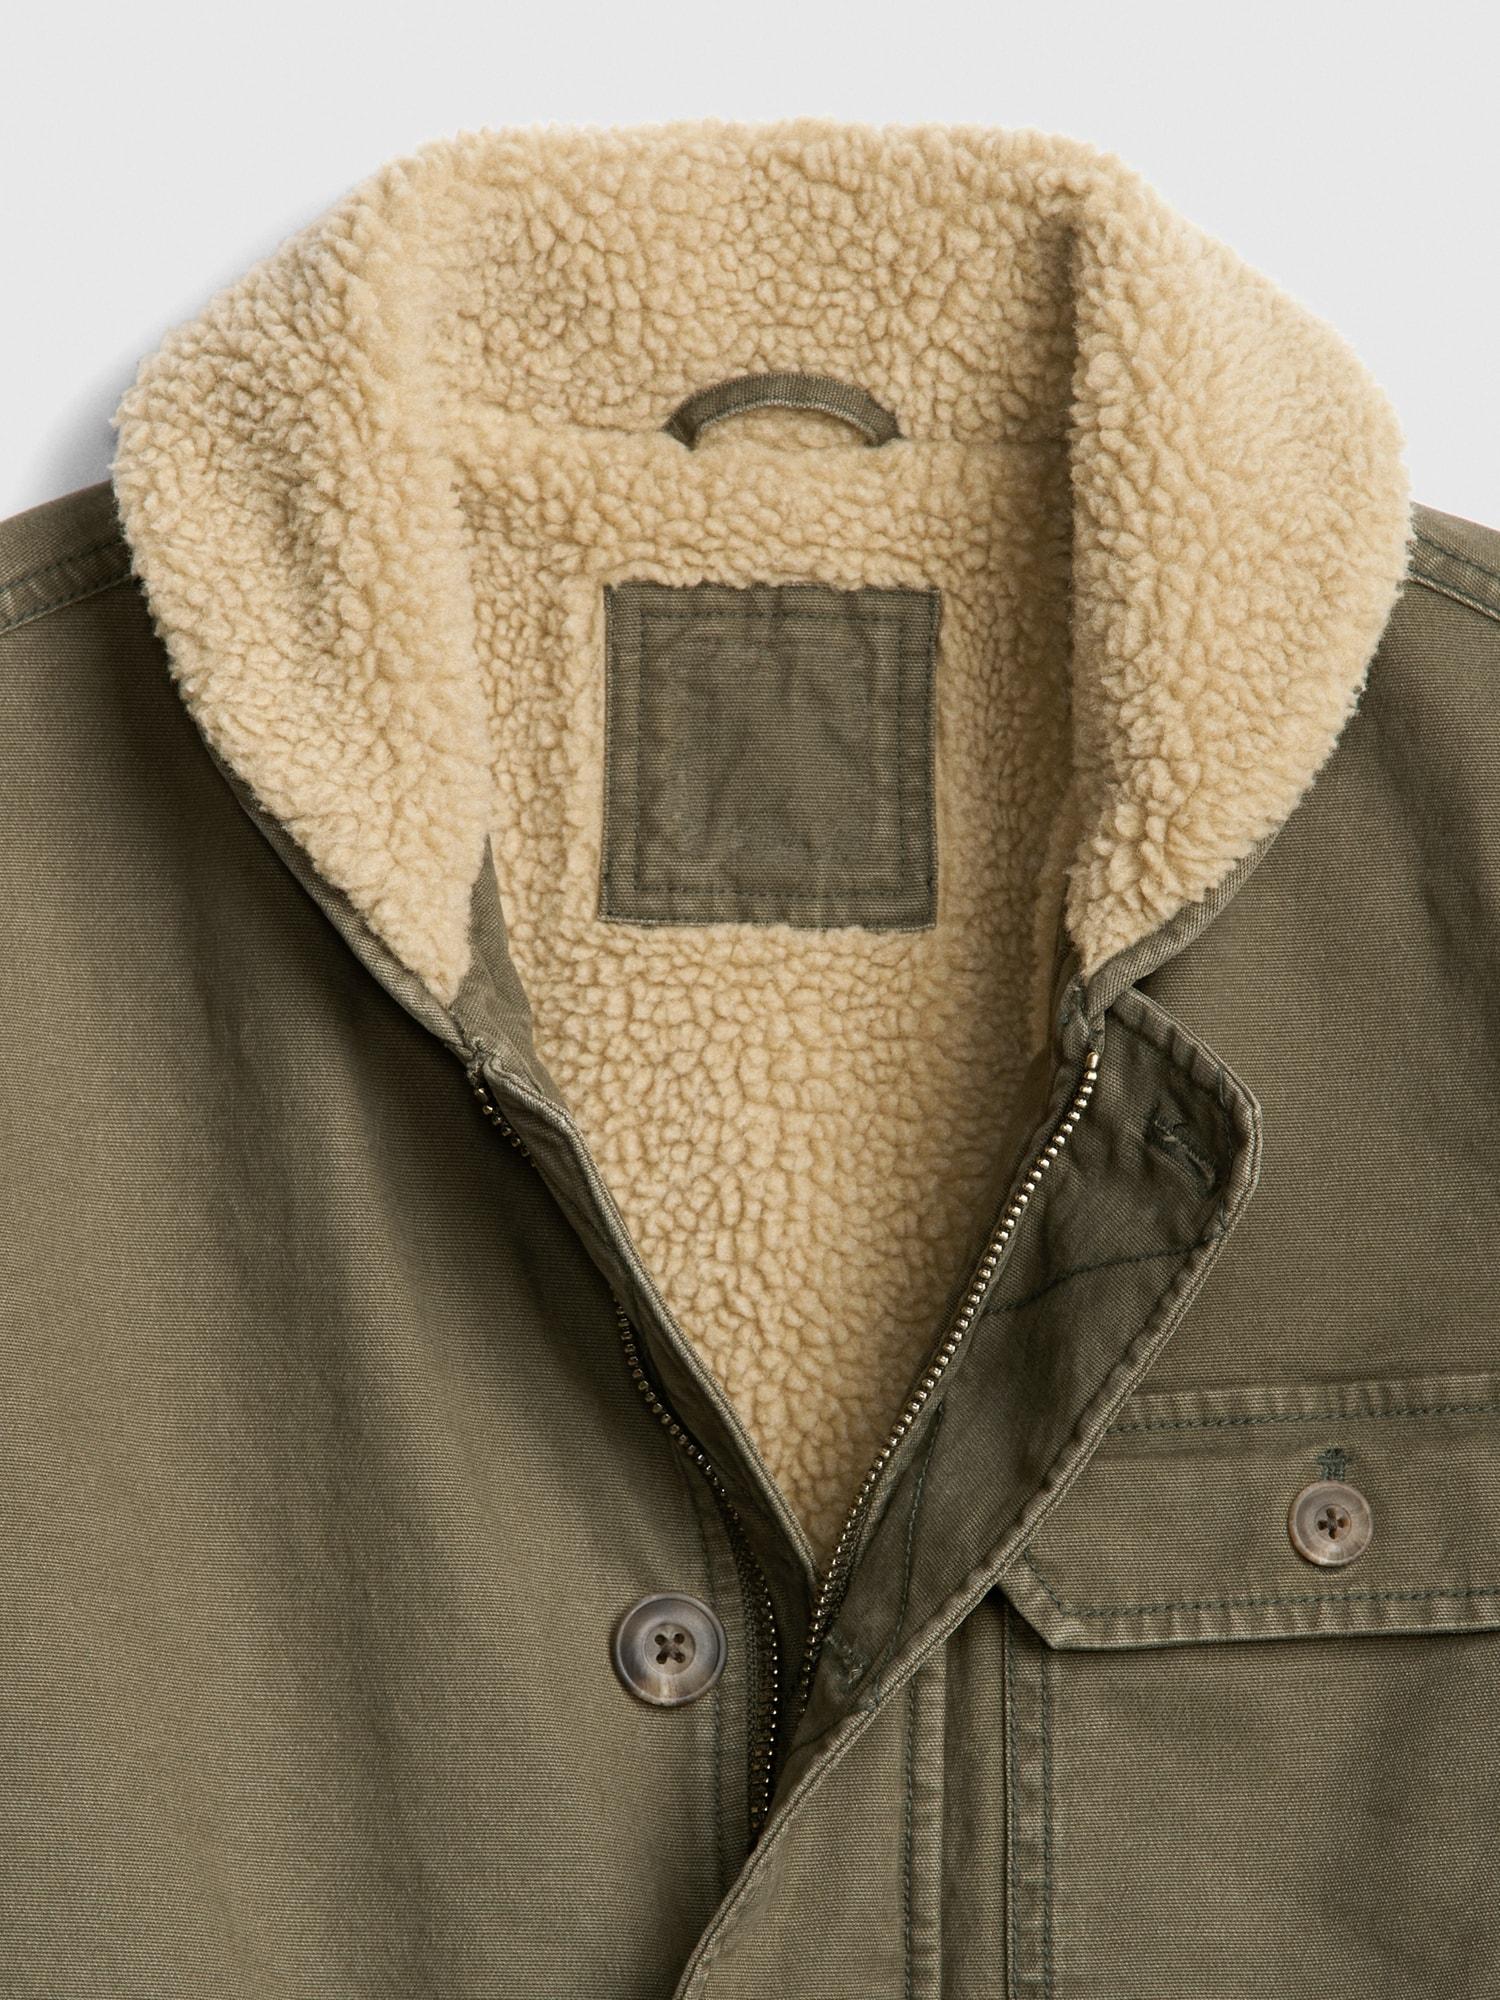 sherpa lined jacket gap